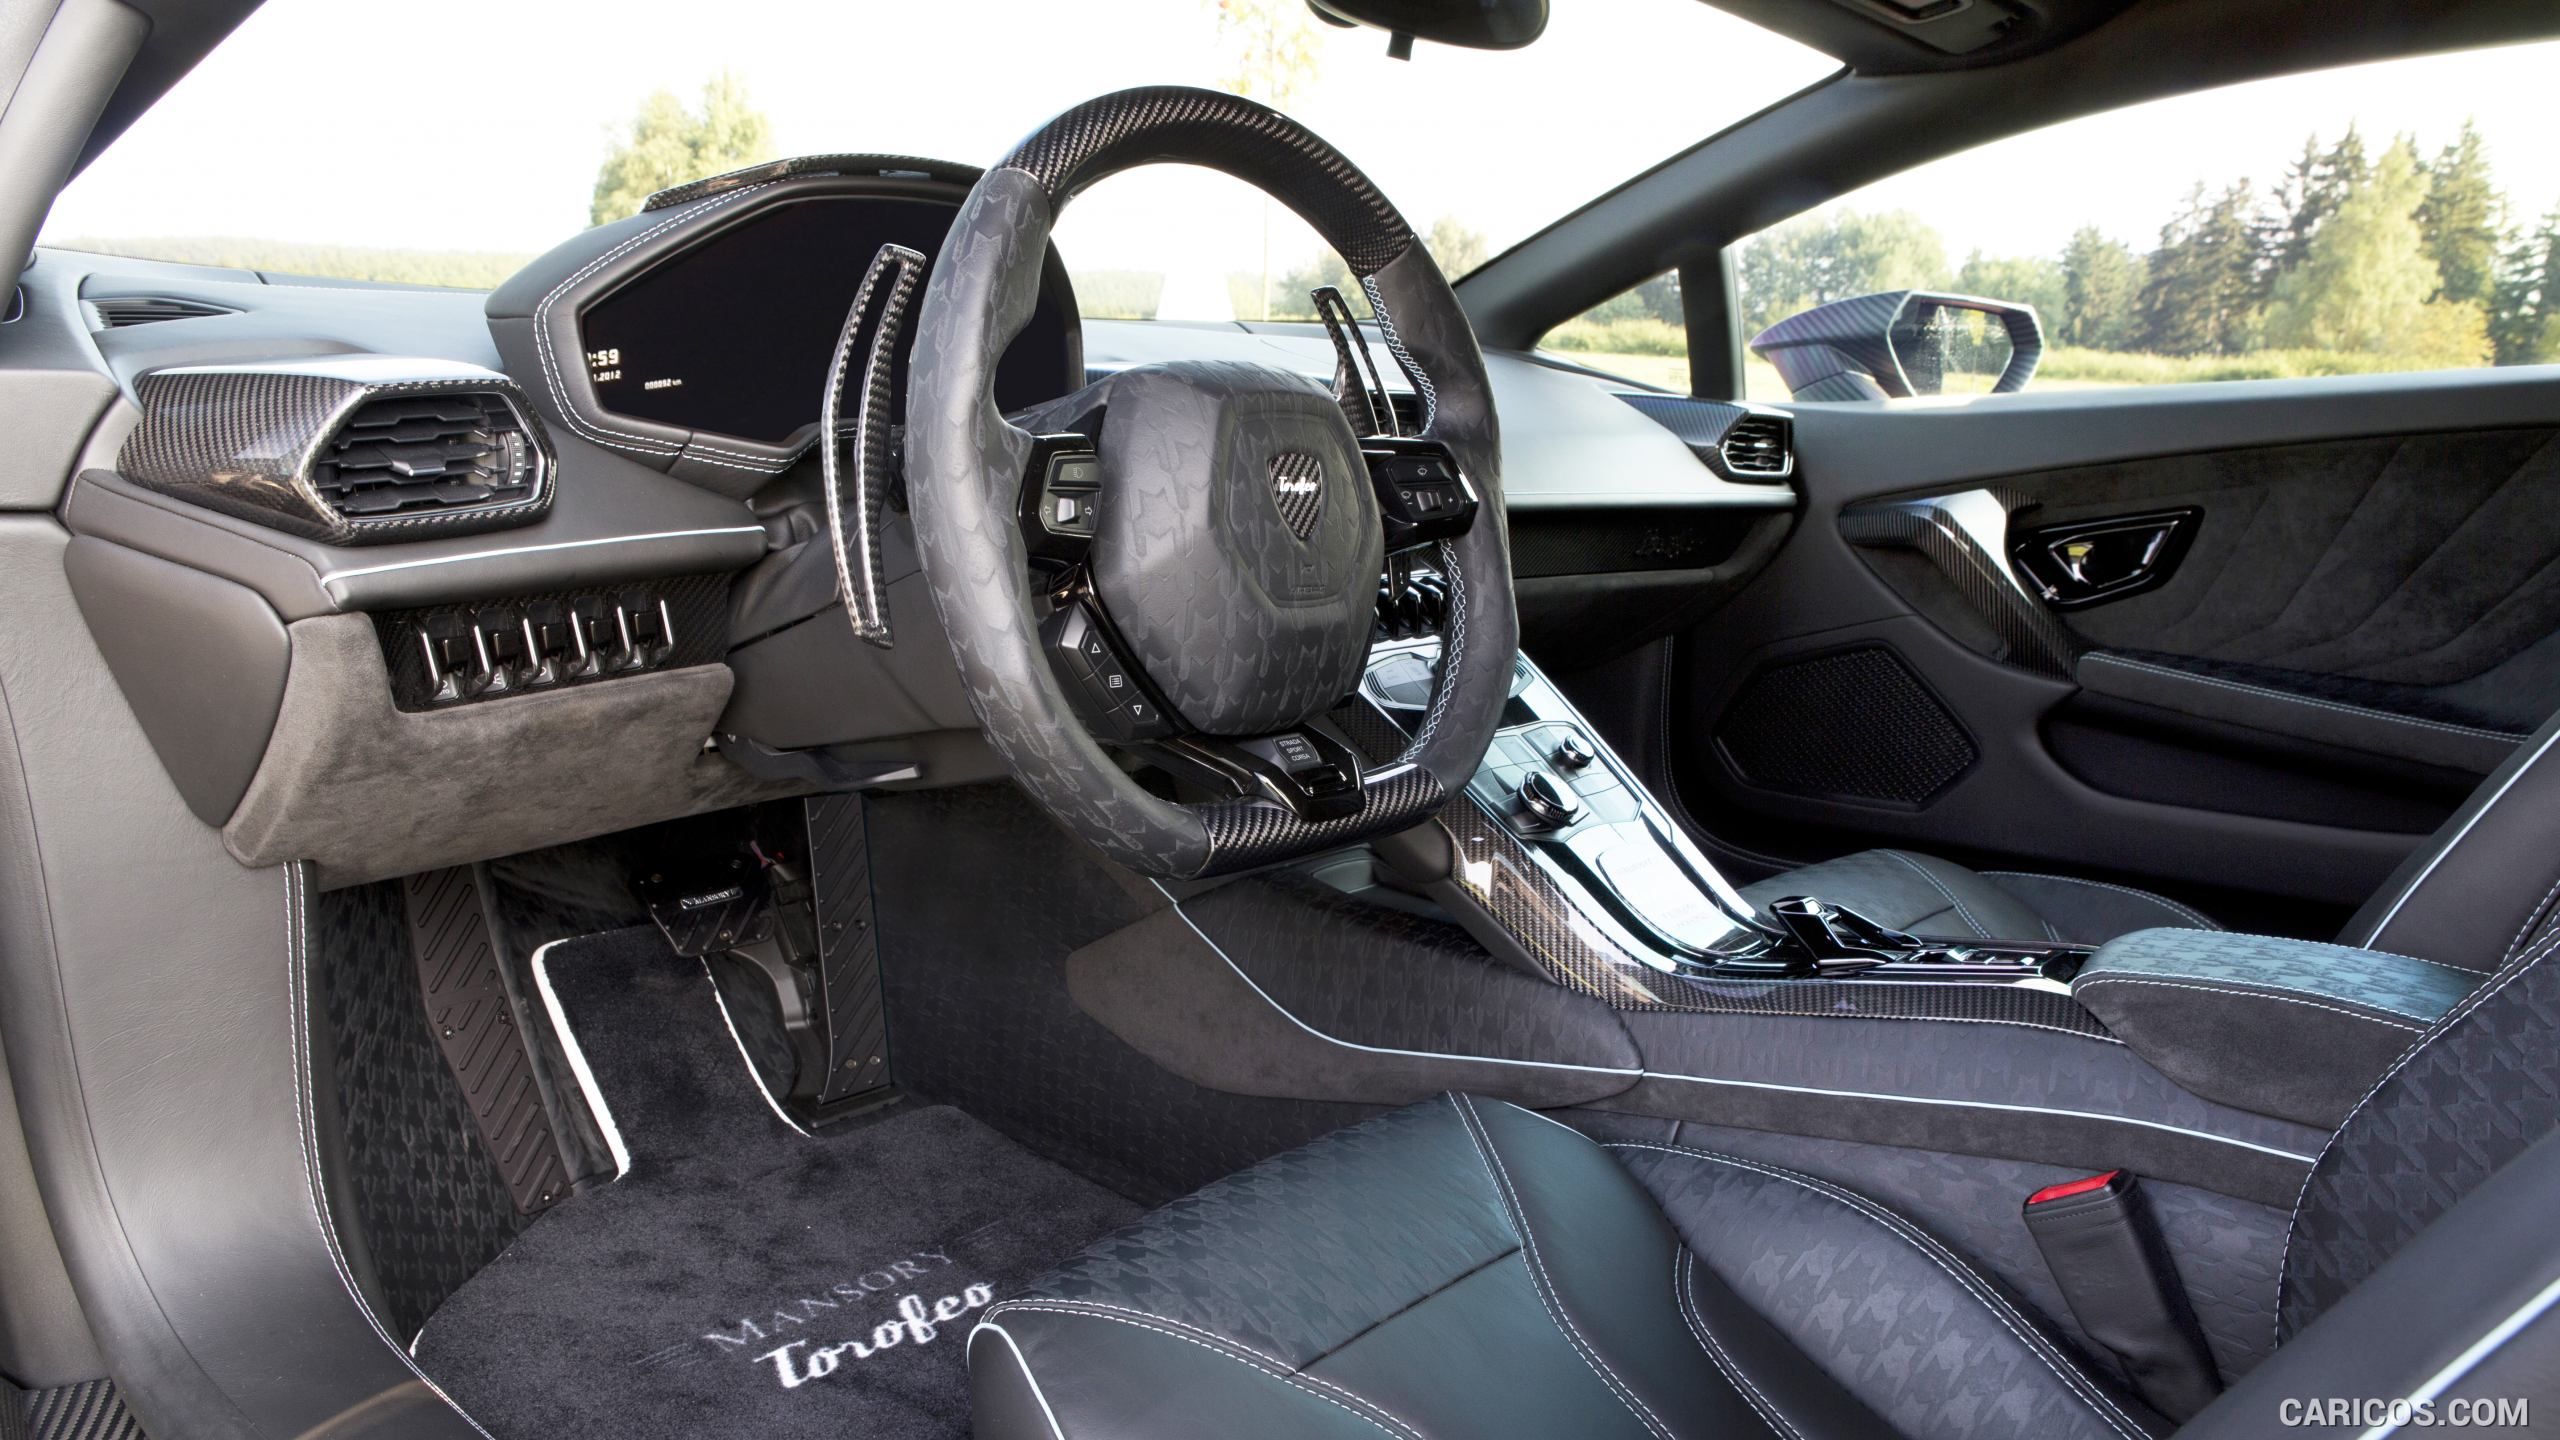 2016 MANSORY TOROFEO based on Lamborghini Huracán - Interior, #8 of 9